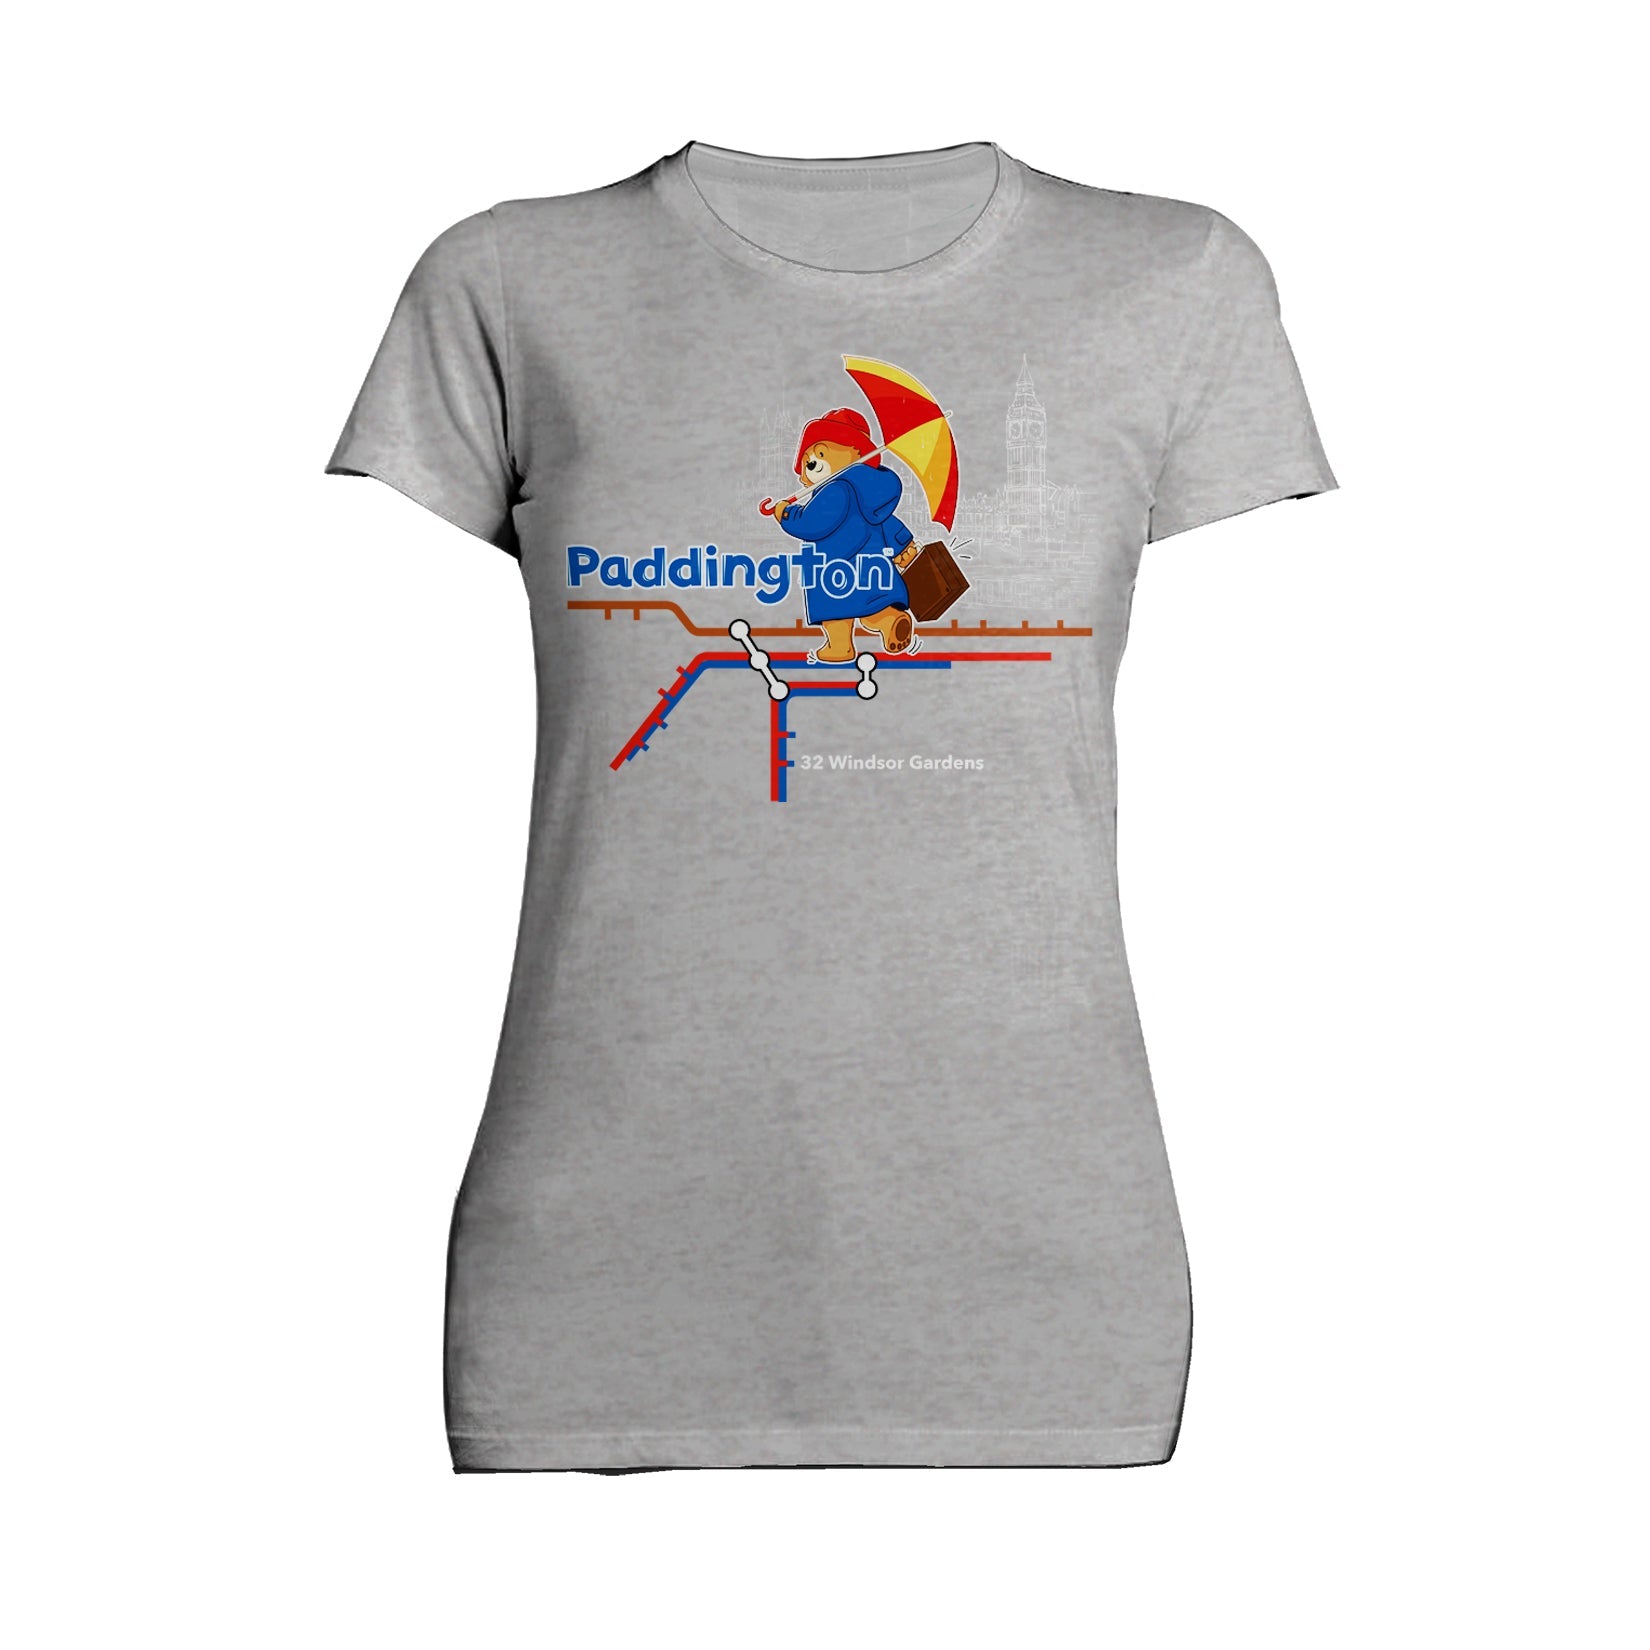 Paddington Bear Collegiate London Tube Map Women's T-Shirt